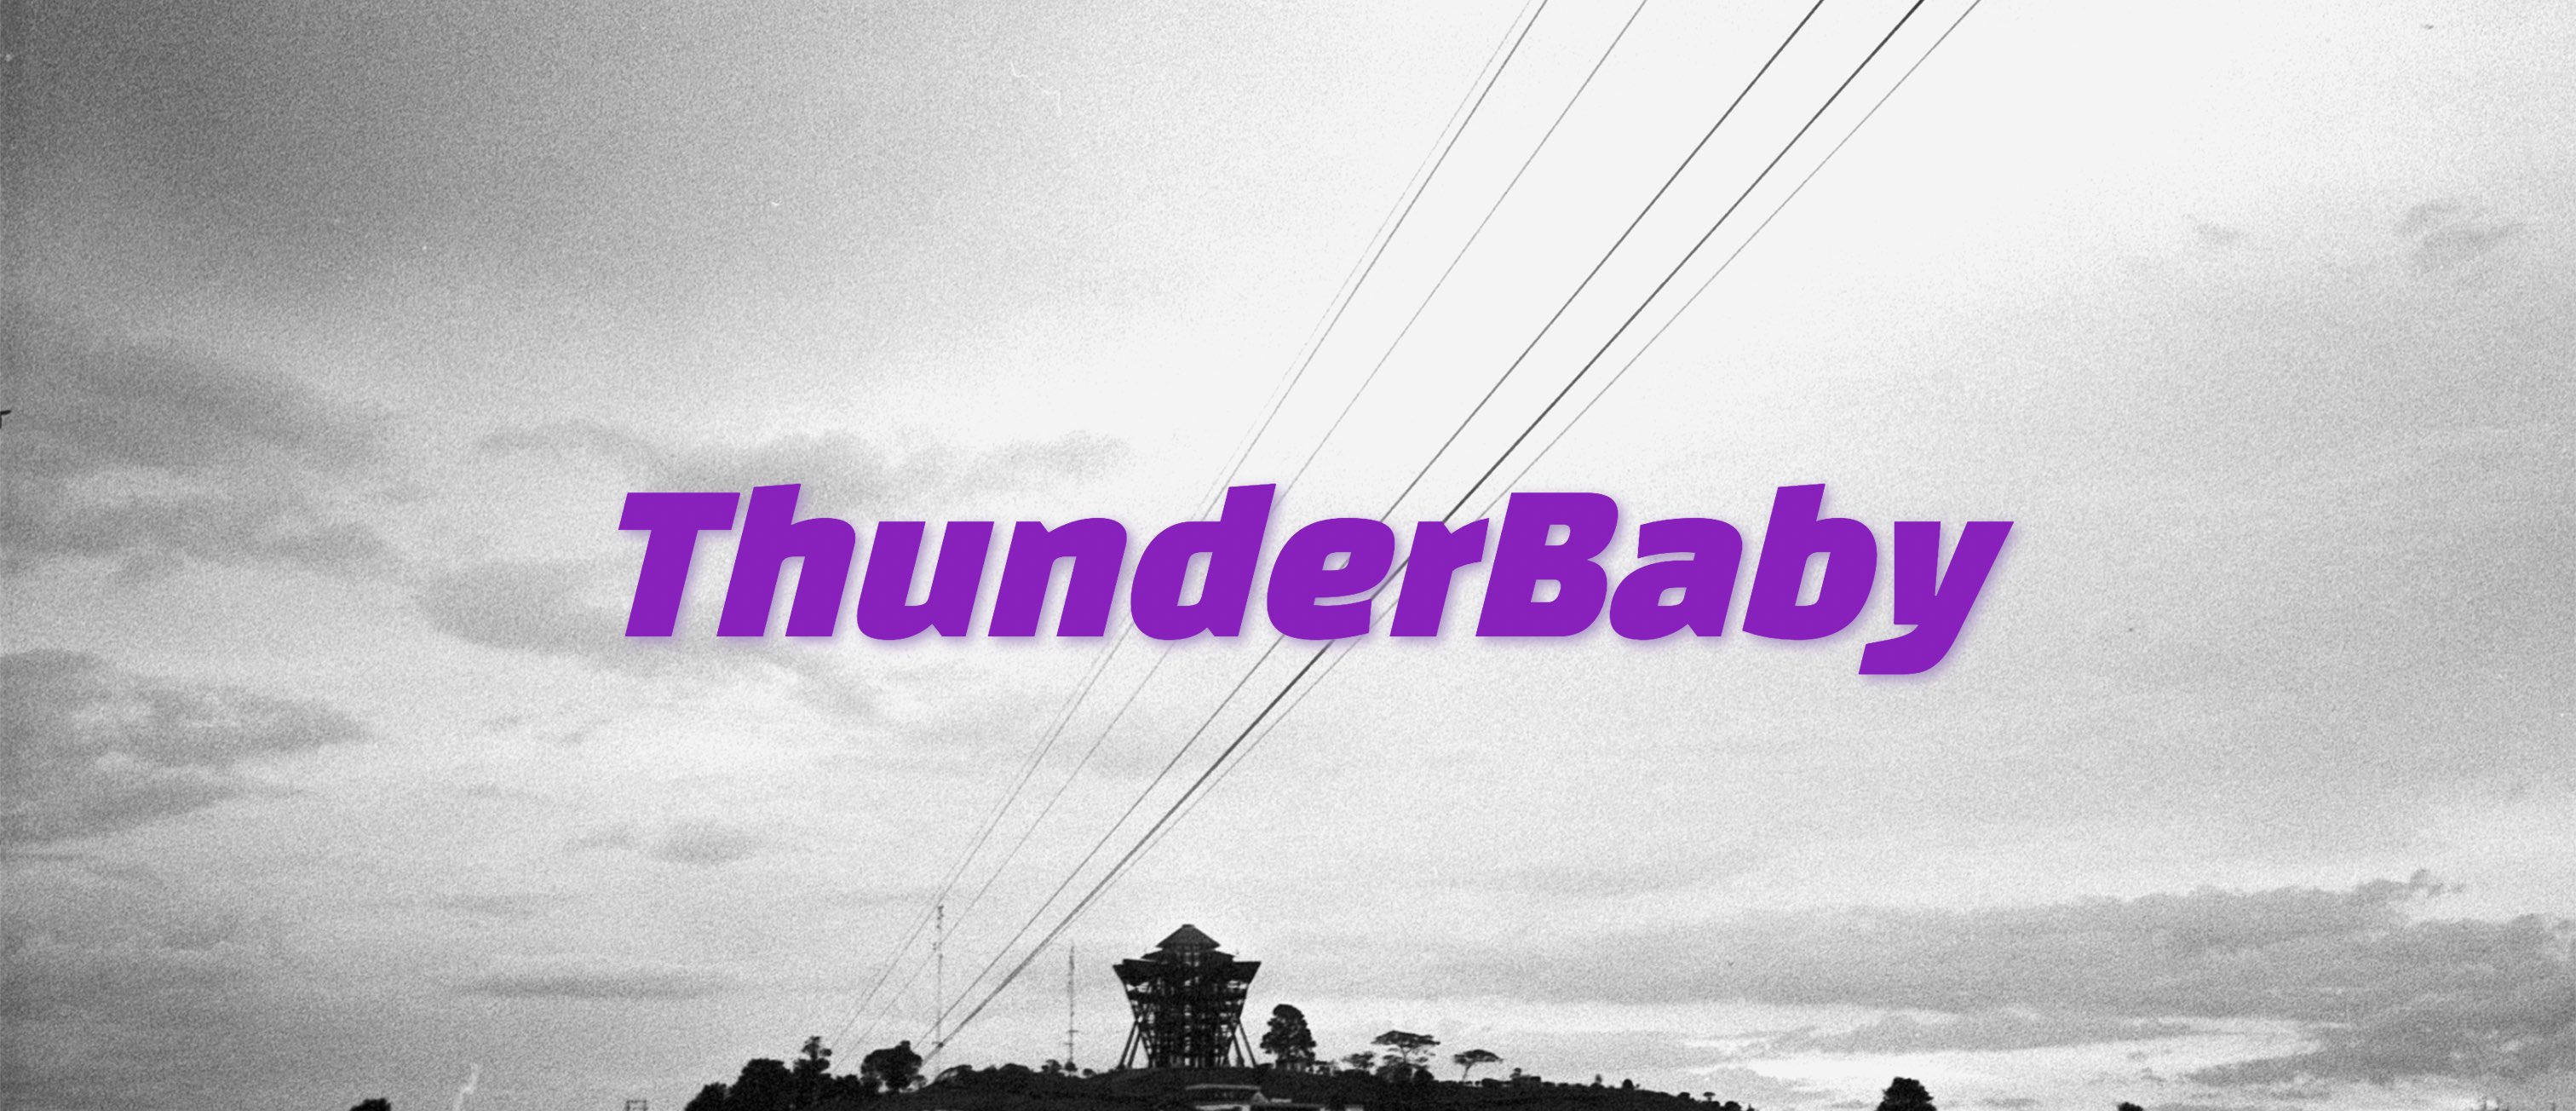 Thunderbaby website screenshot